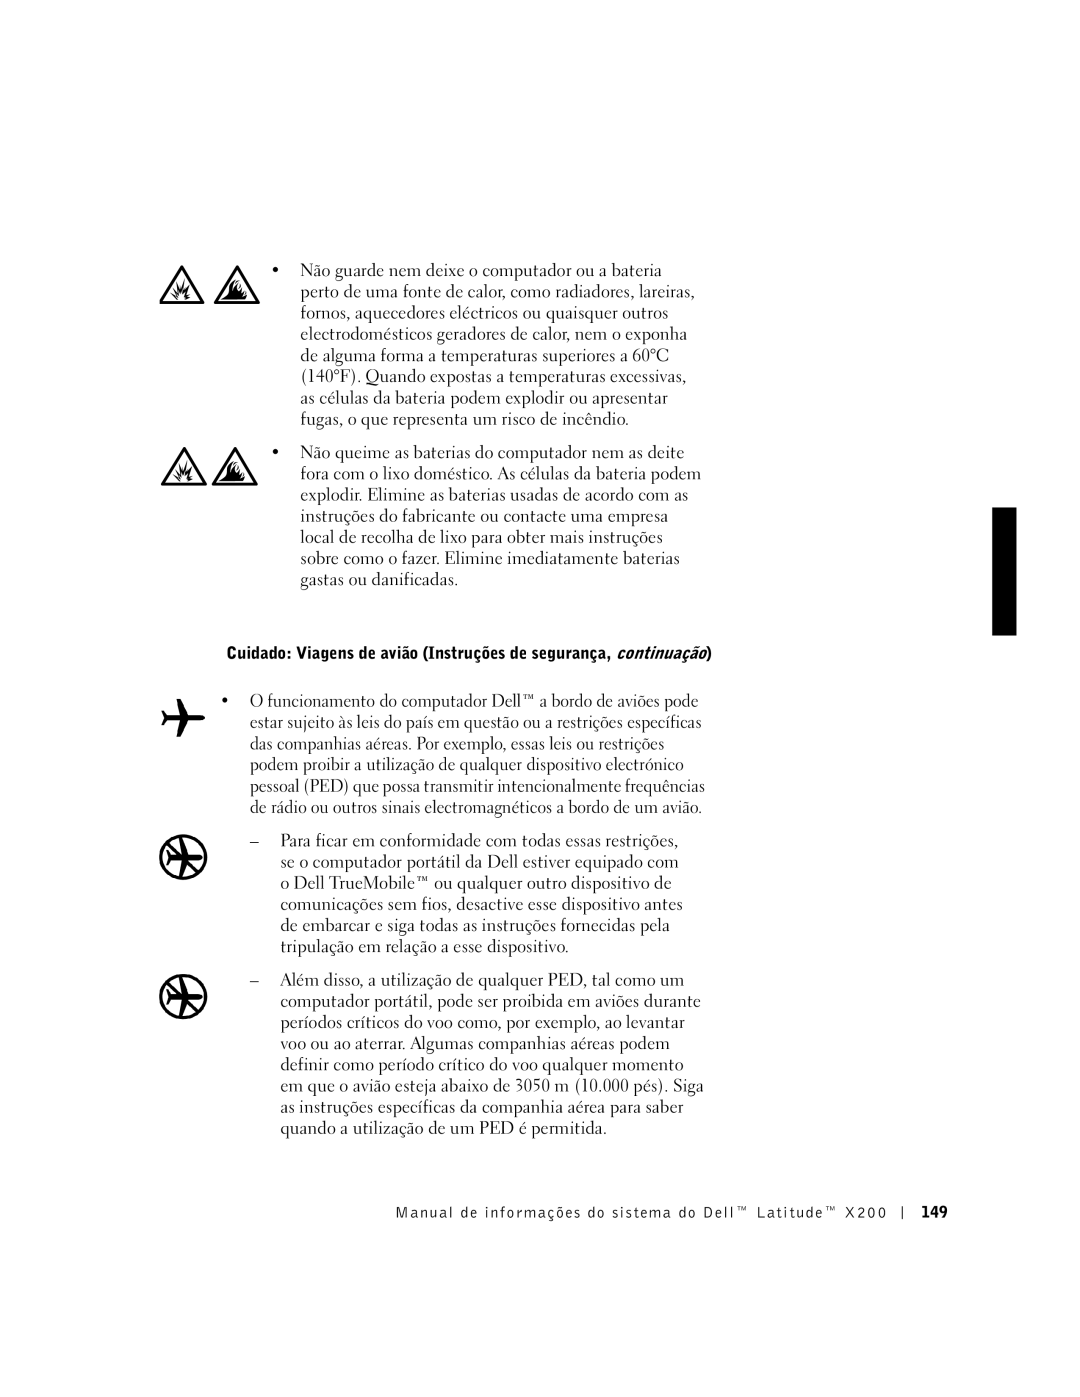 LeapFrog PP03S manual Manual de informações do sistema do Dell Latitude 149 